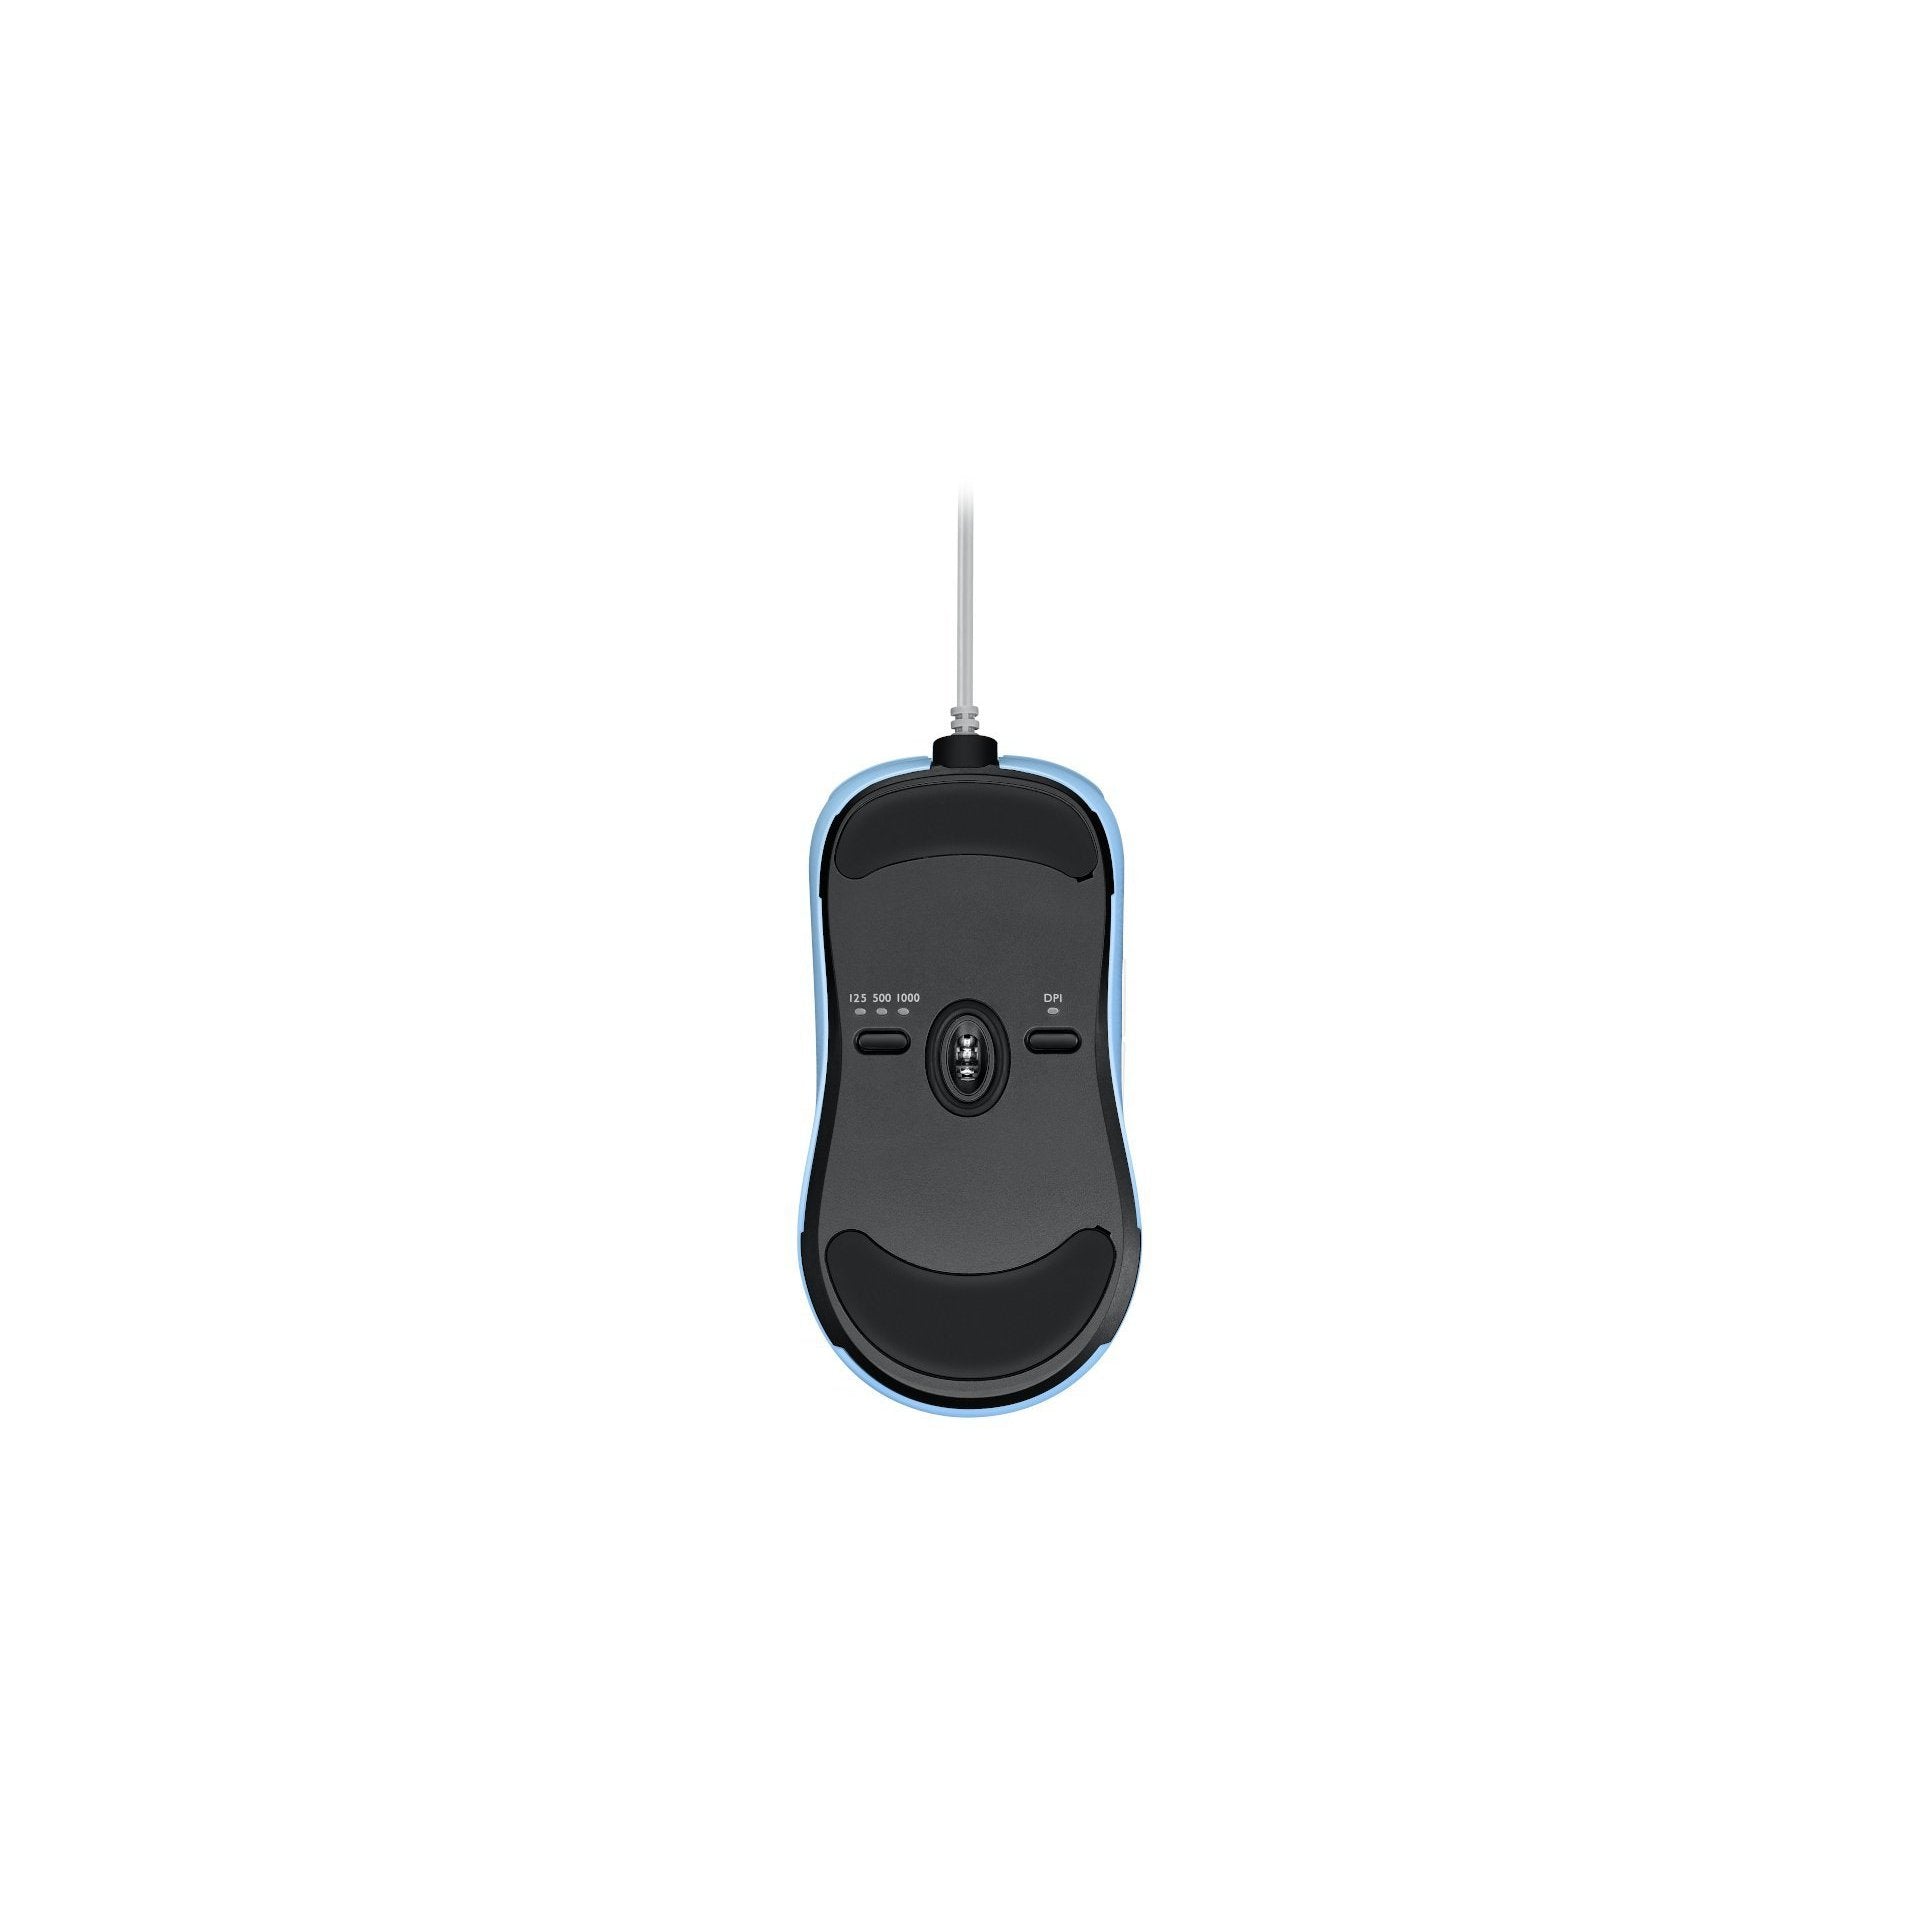 ZOWIE FK2-B DIVINA Blue eSports Mouse-Addice Inc